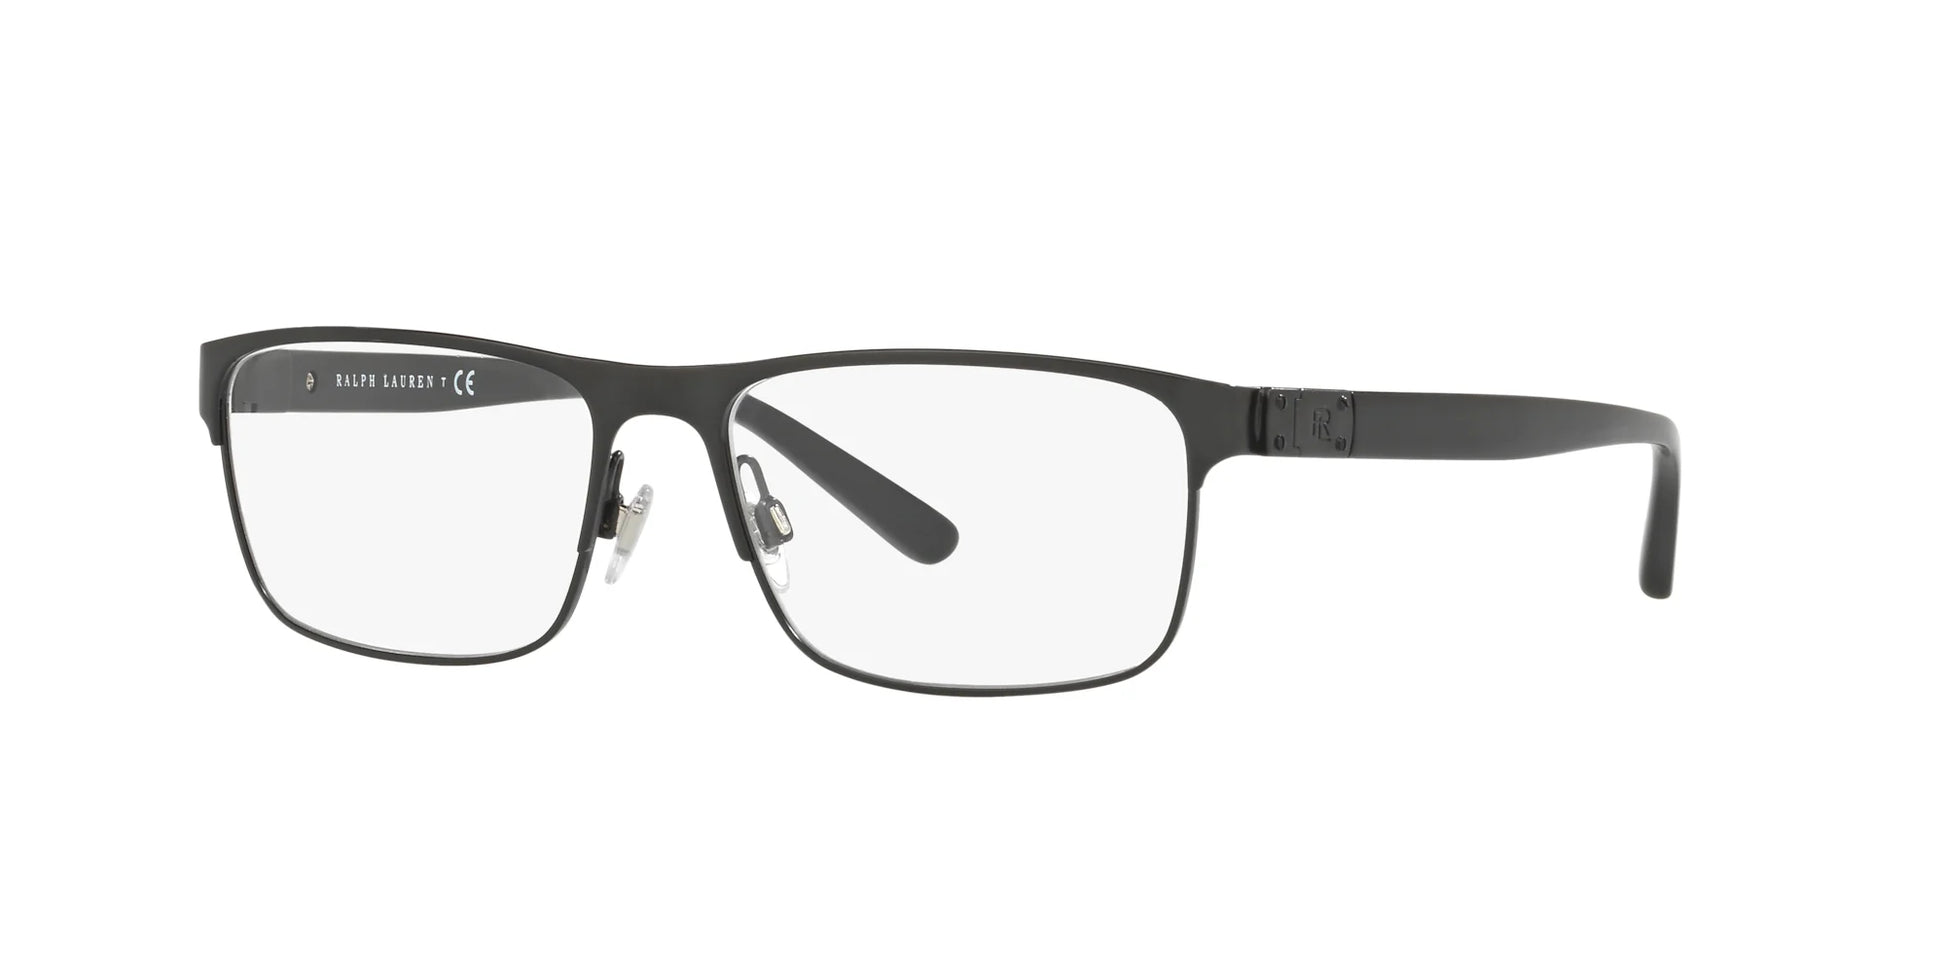 Ralph Lauren RL5095 Eyeglasses Semi-Shiny Black